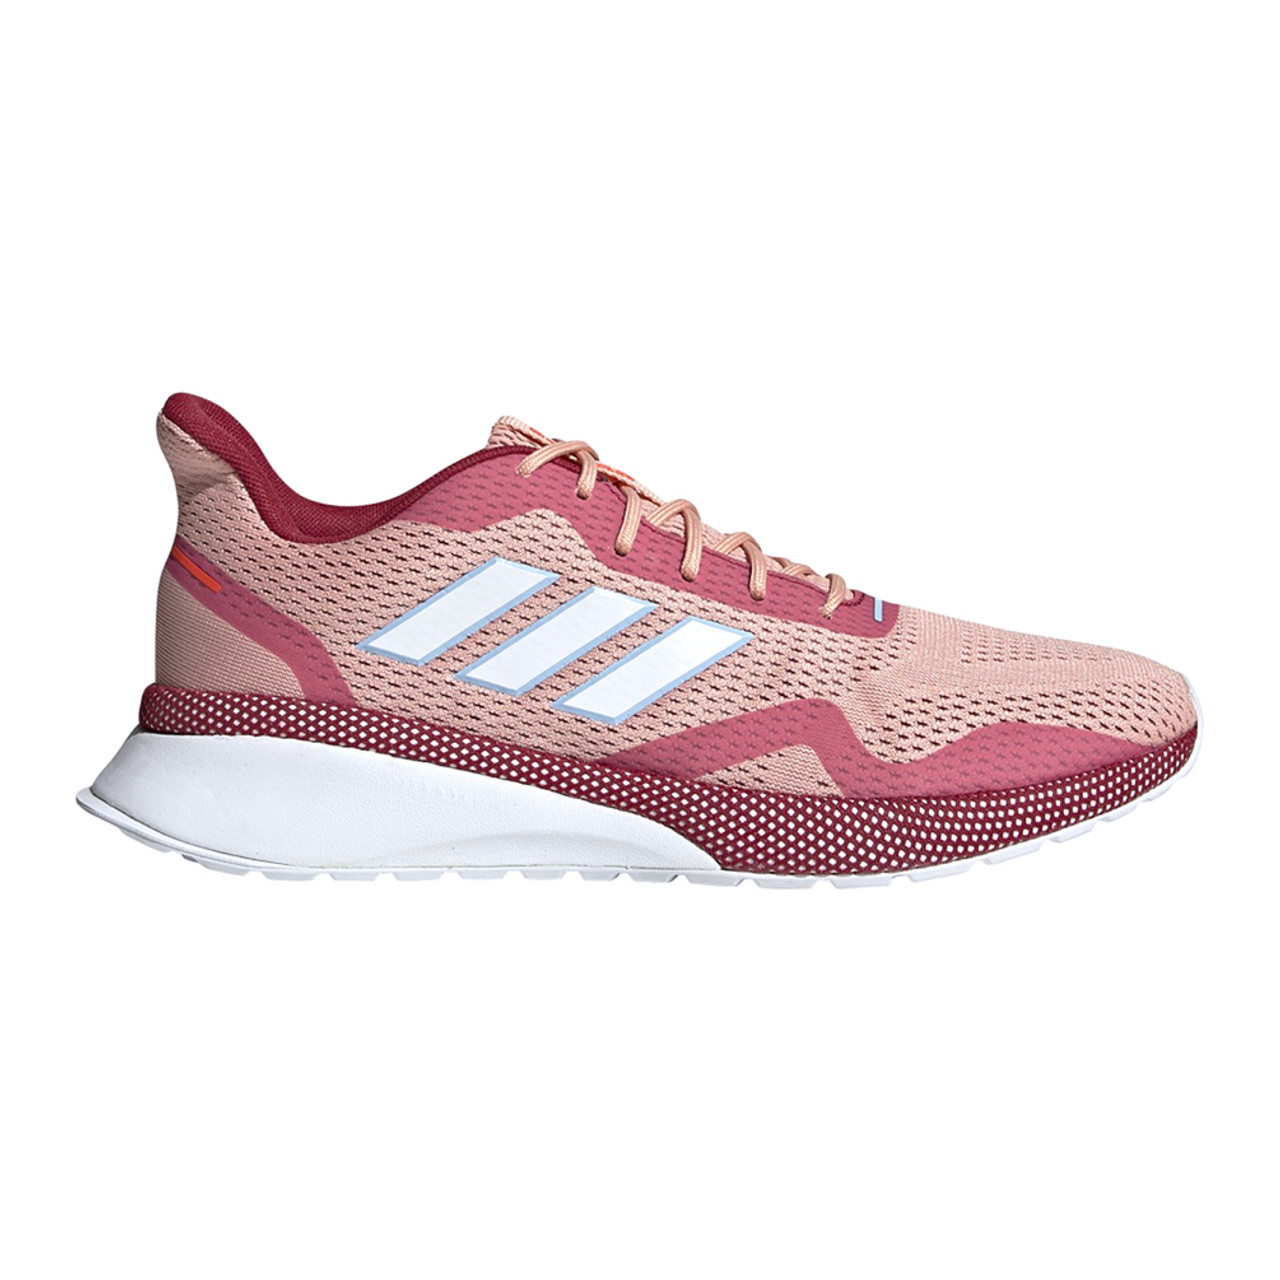 adidas women's nova x running shoe